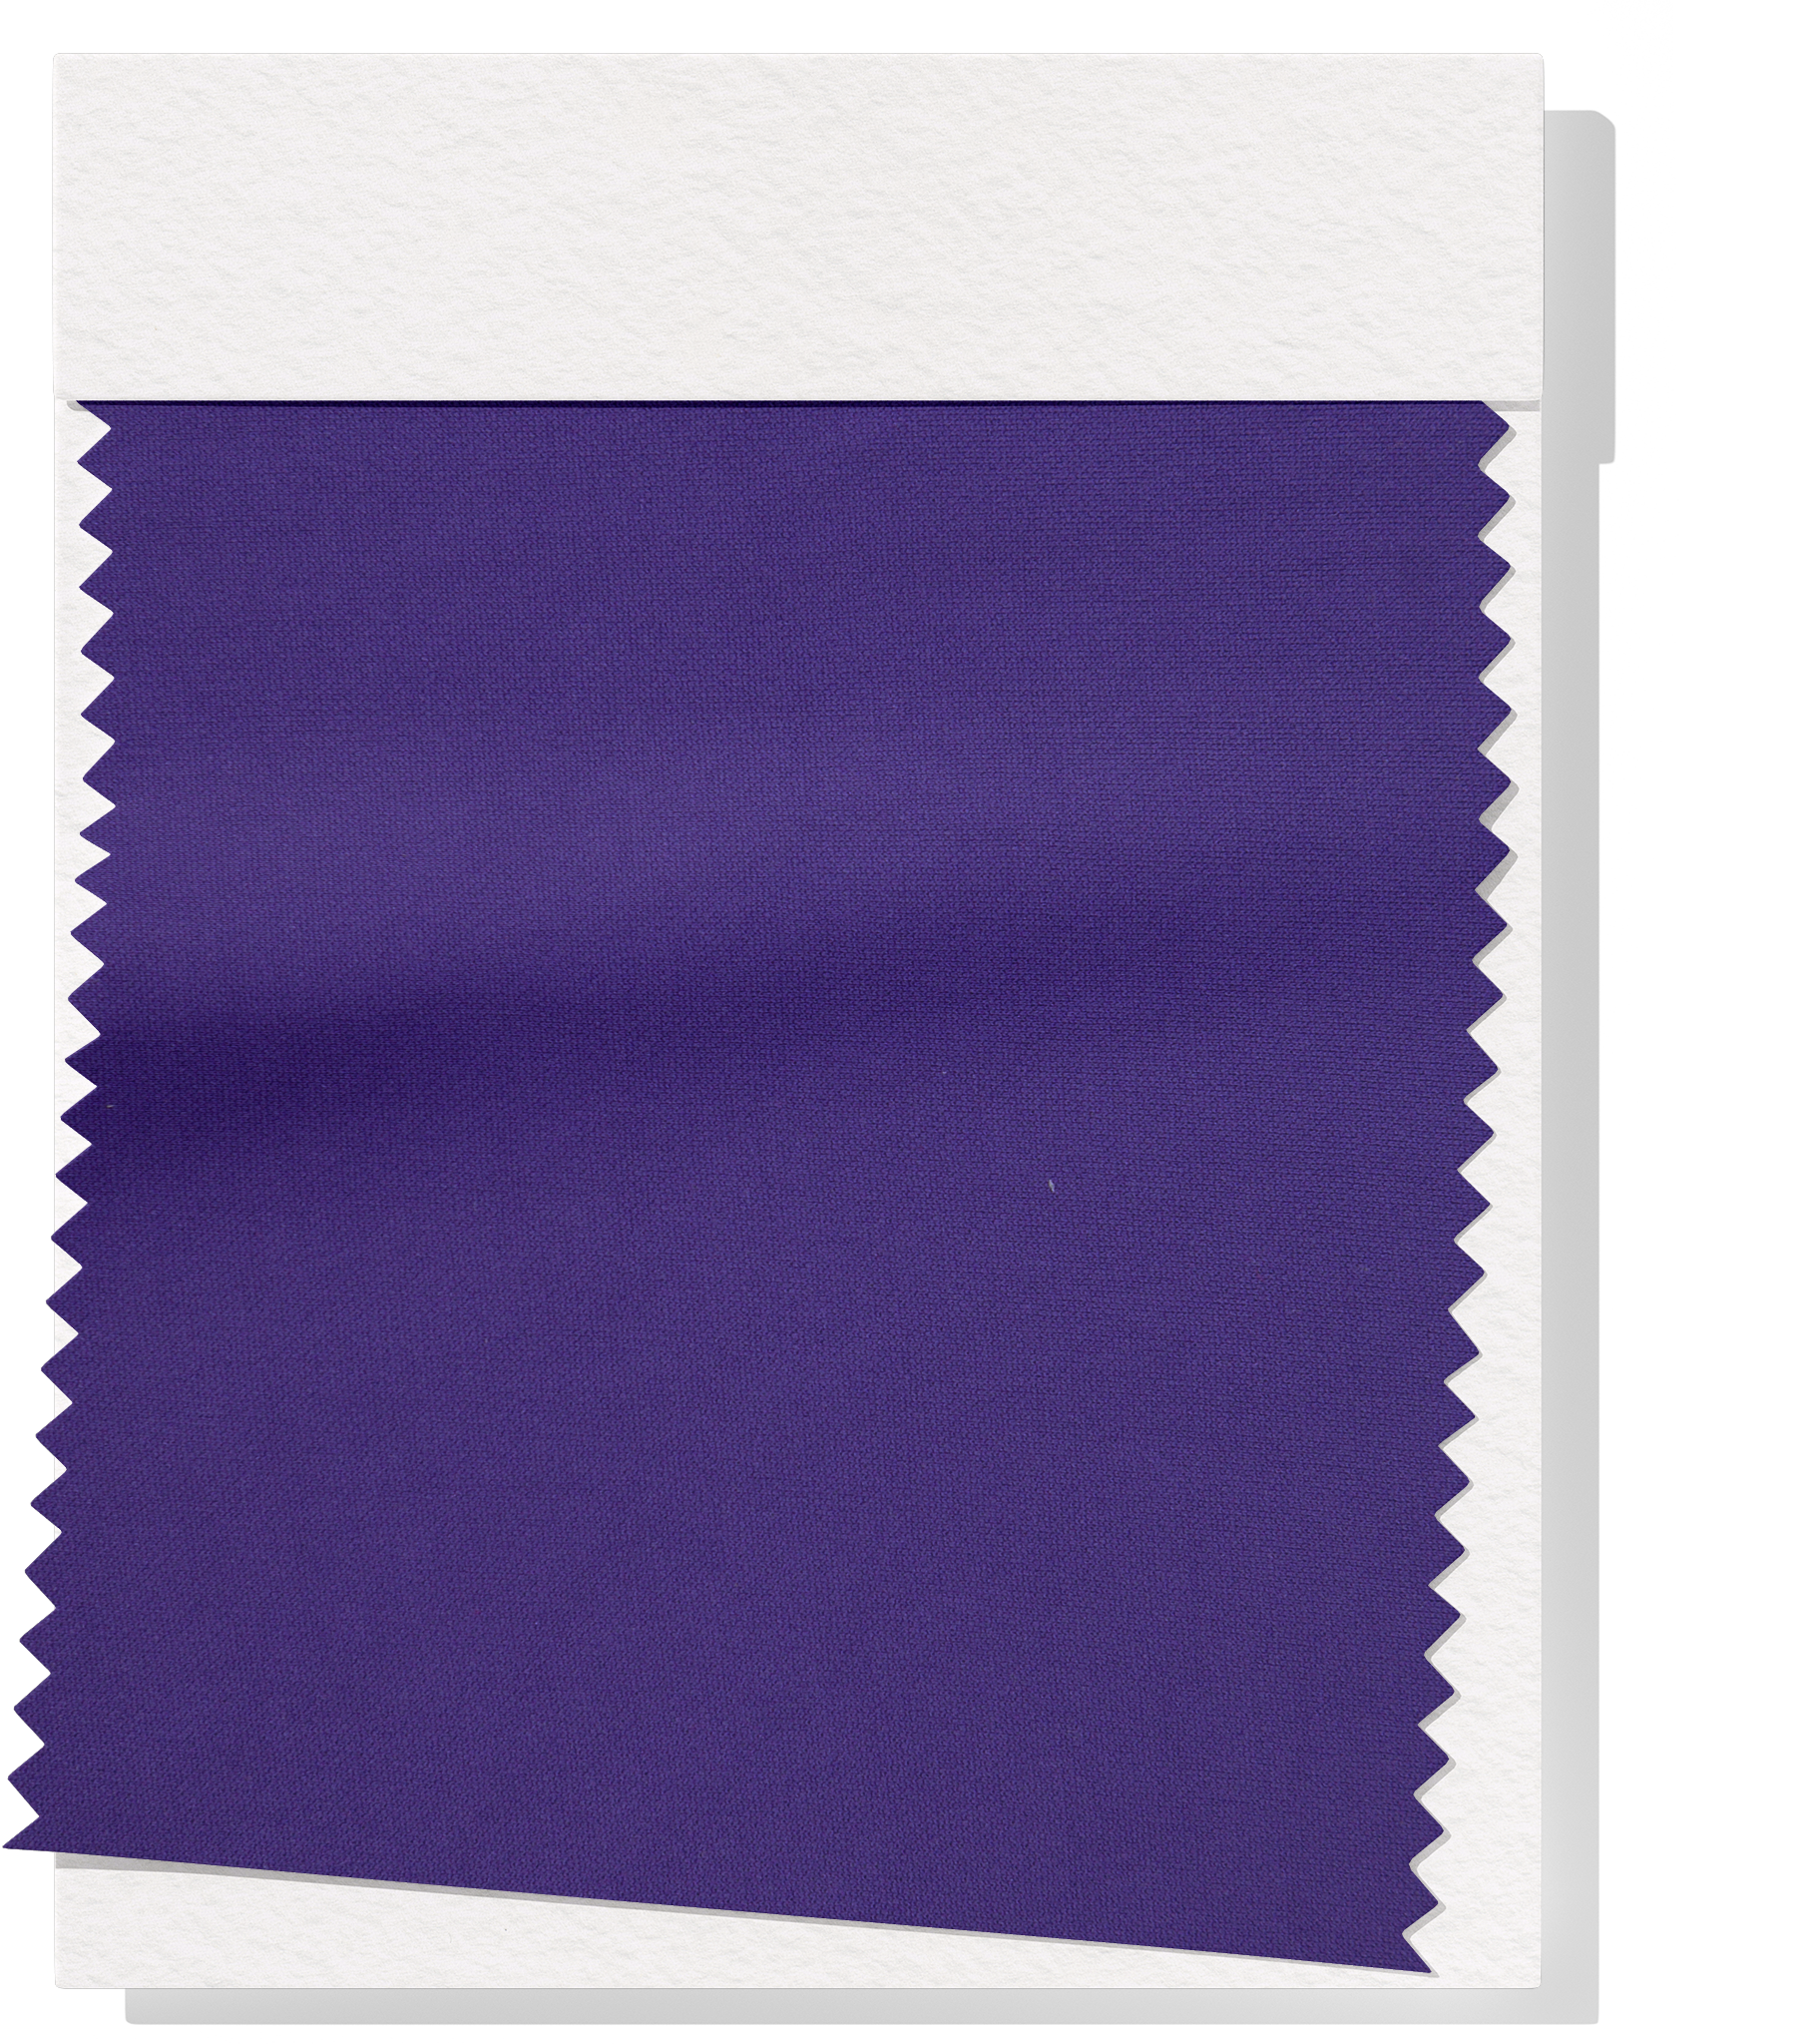 Polyester Knit $9.00p/m - Purple